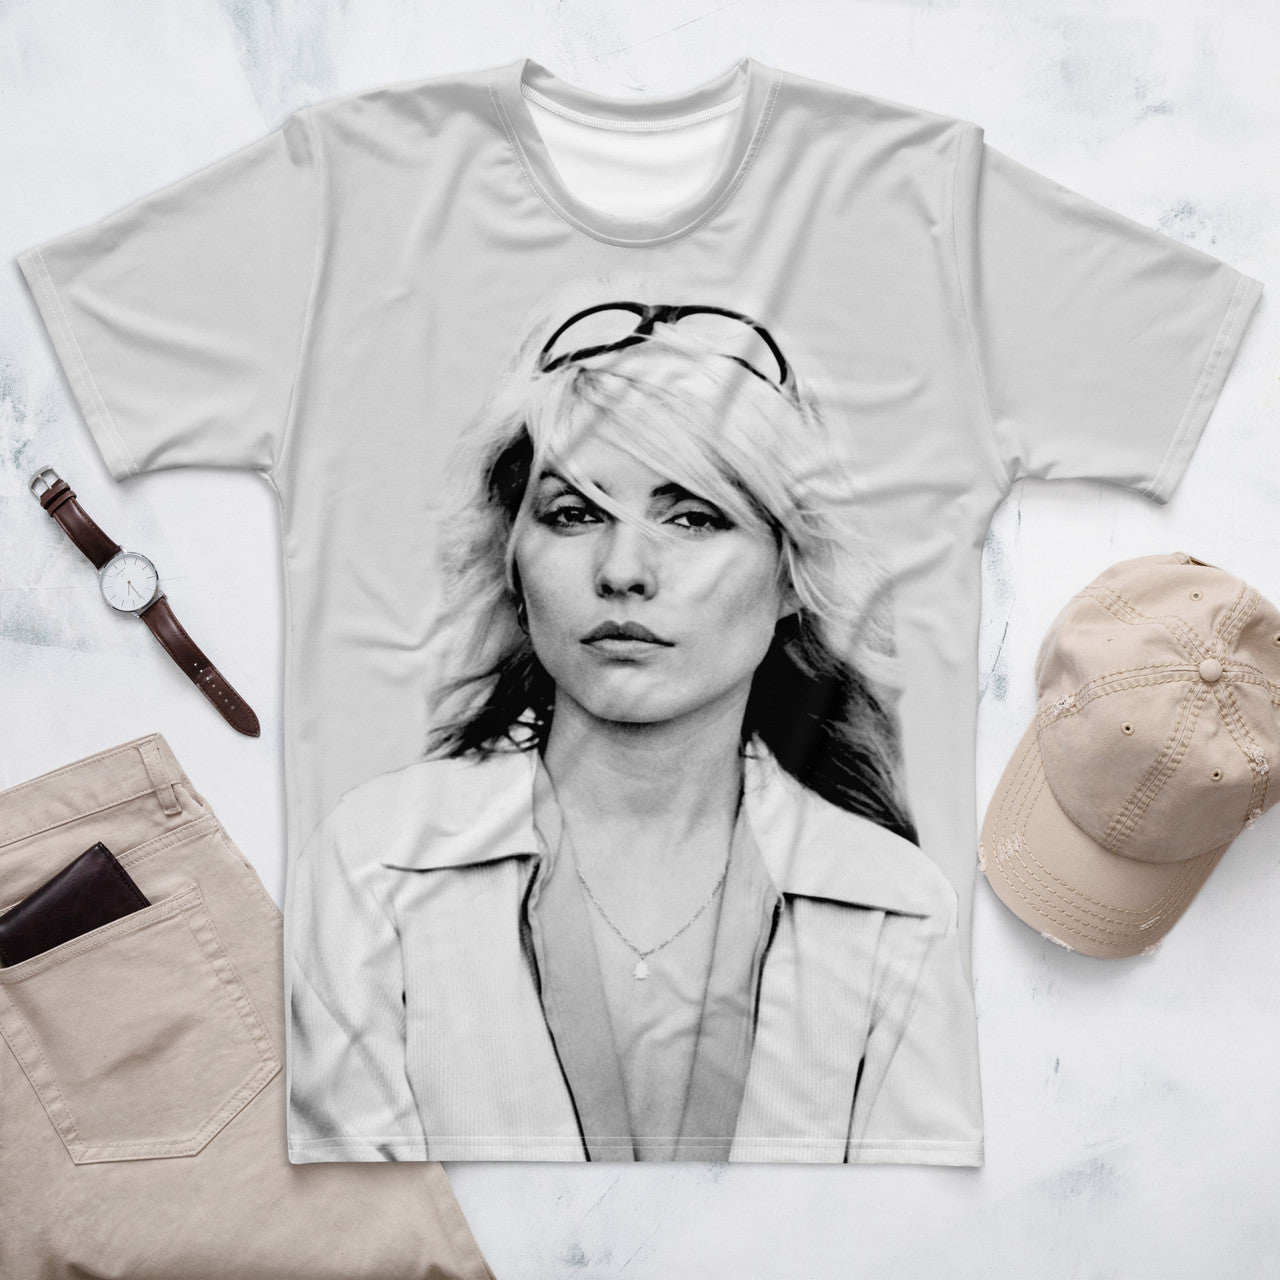 Debbie Harry KiSS Large Print t-shirt - Blondie punk icon music